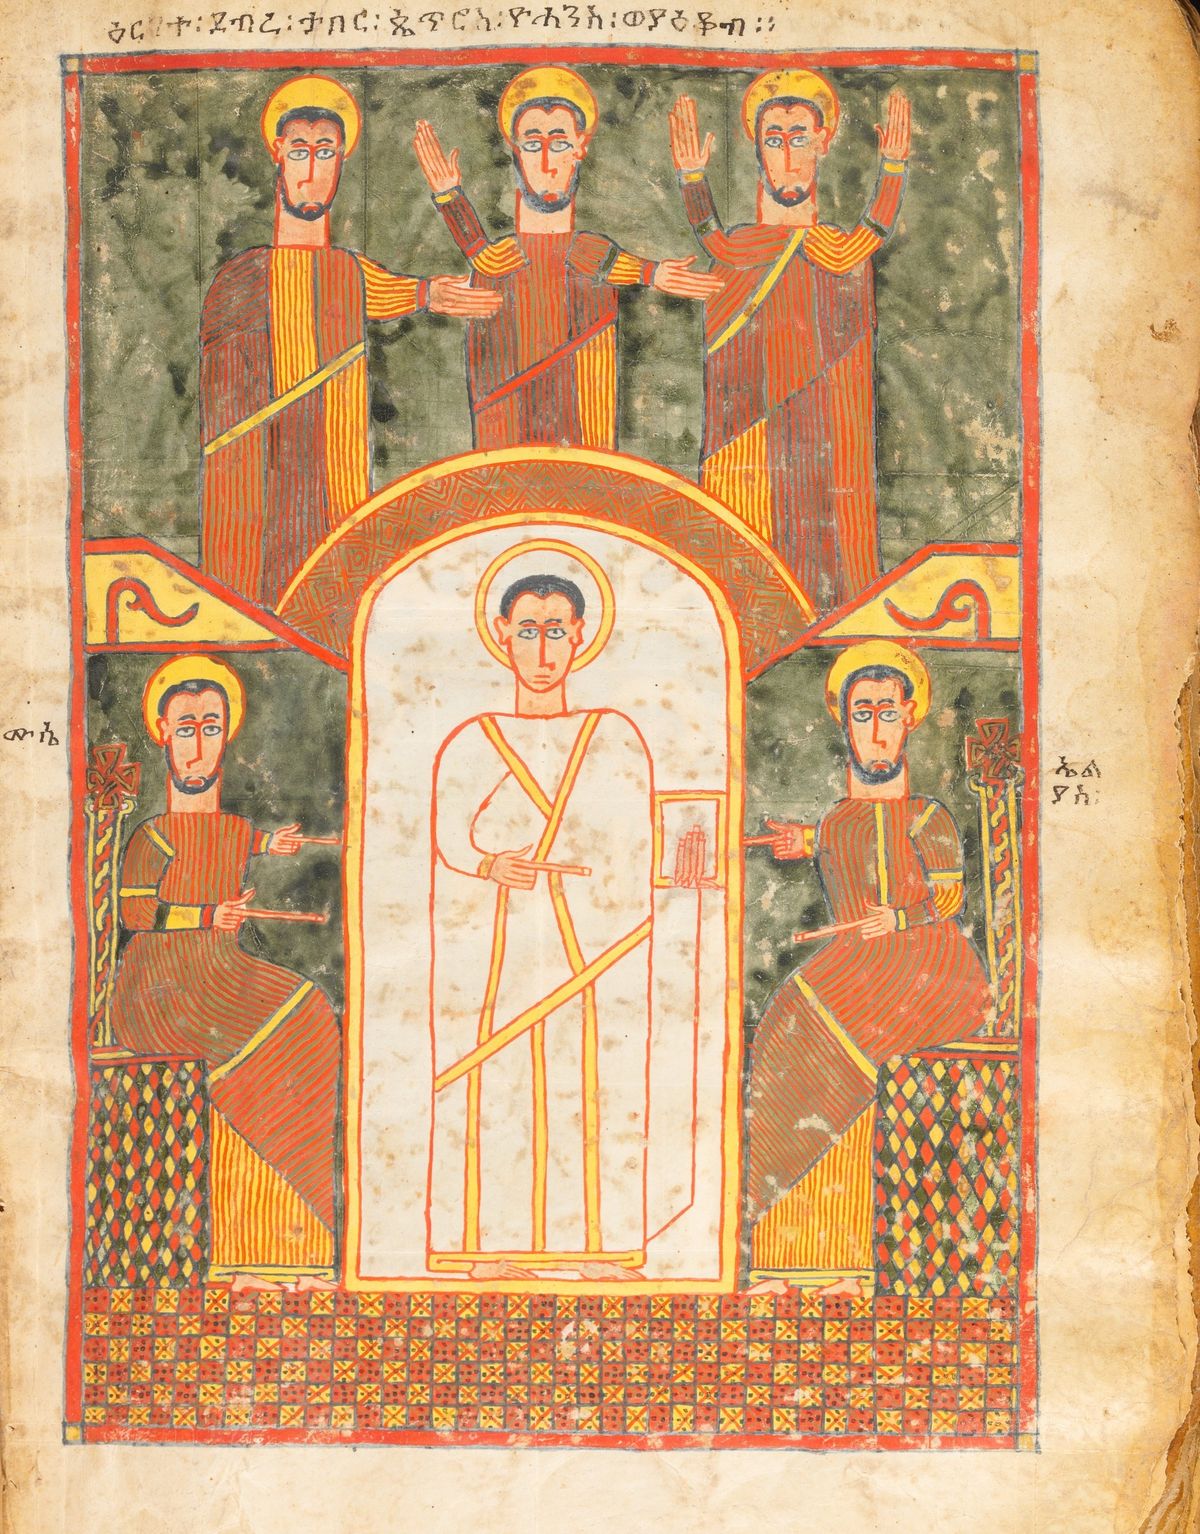 Transfiguration of Christ Illuminated Gospel (14th–15th century) by the Amhara Peoples - Public Domain Ethiopian Orthodox Painting